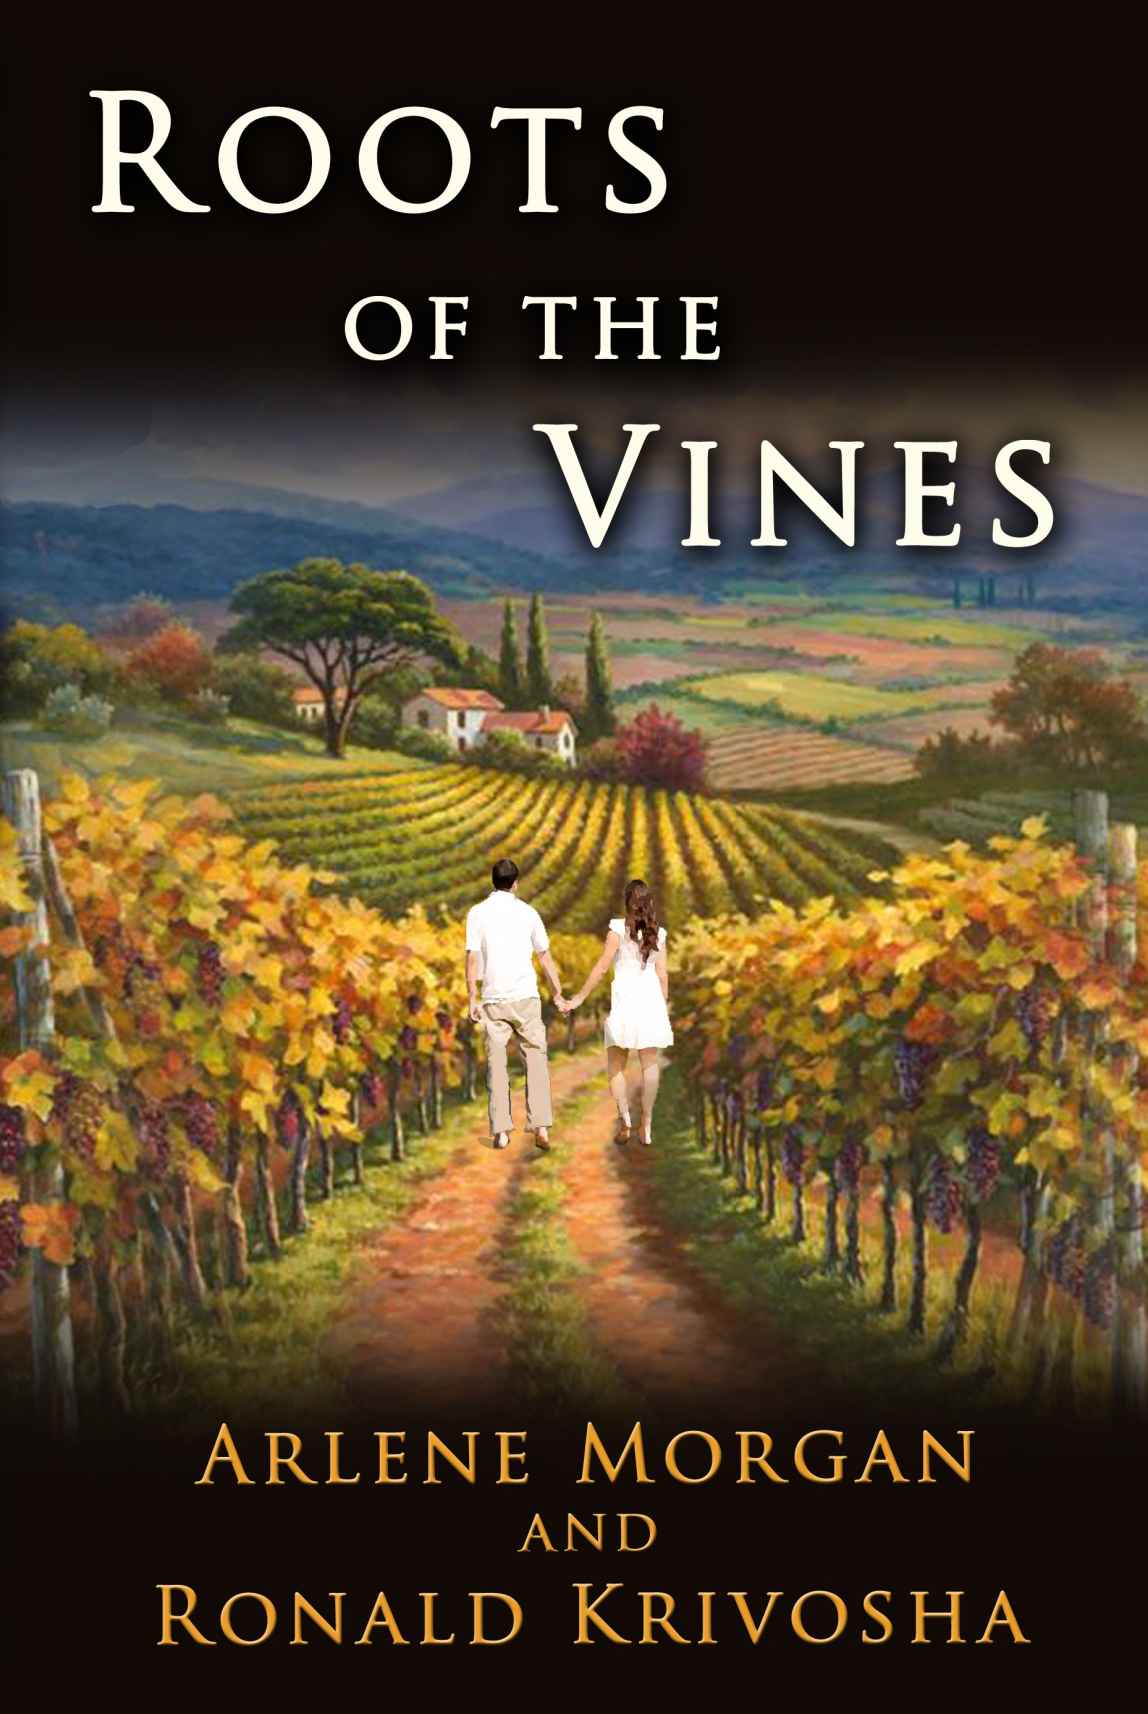 Roots of the Vines by Arlene Morgan and Ronald Krivosha (Fiction, Romance)